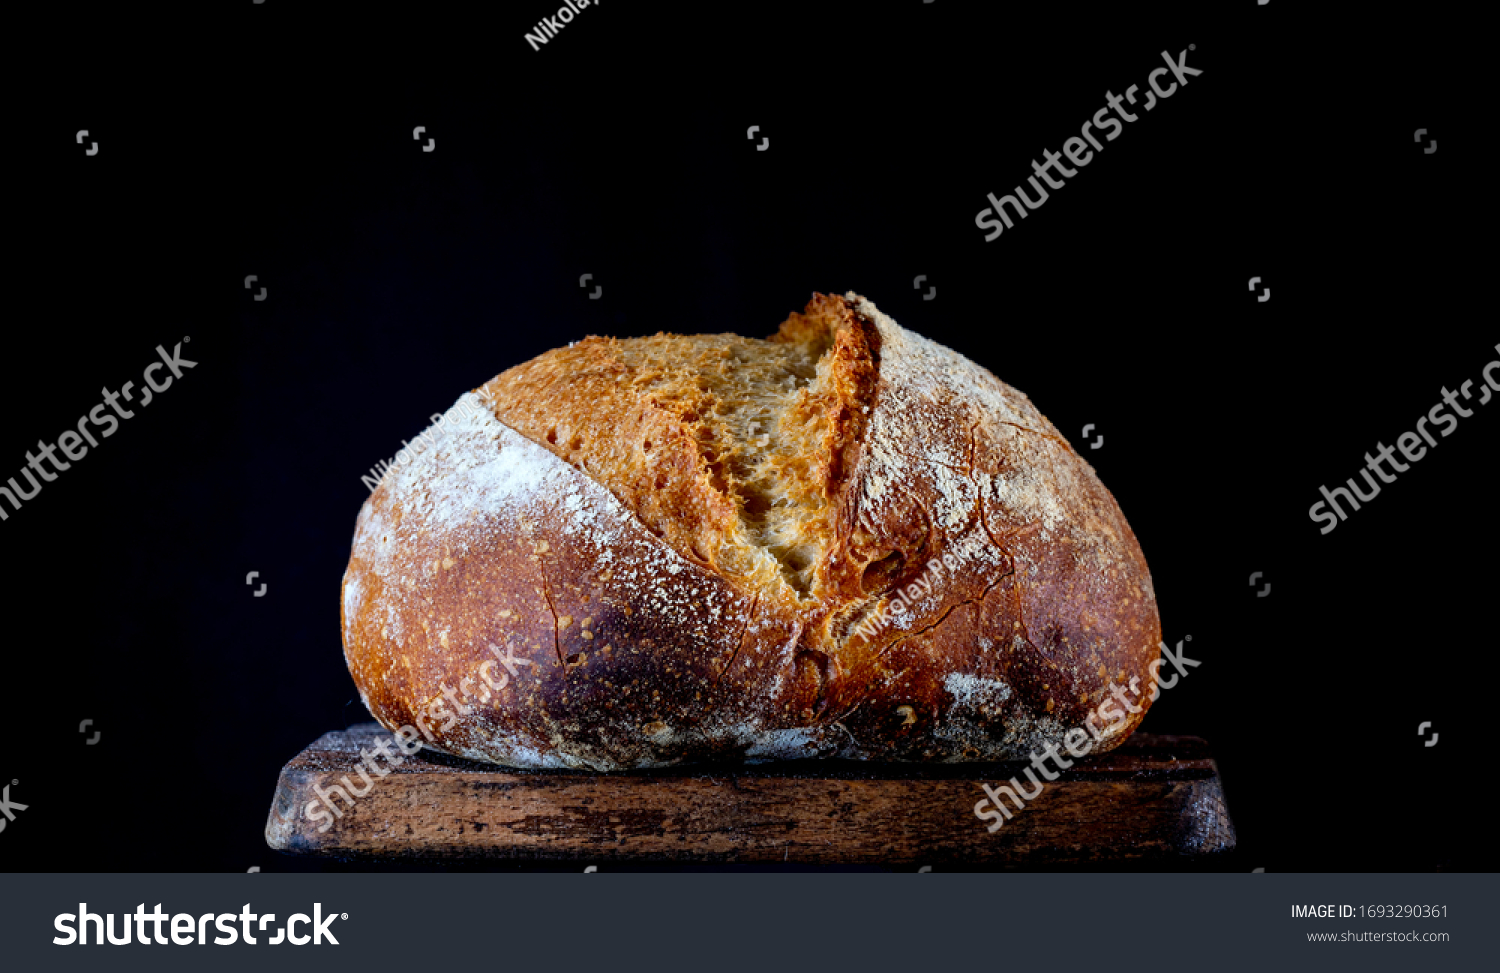 French lean bread in dark background #1693290361